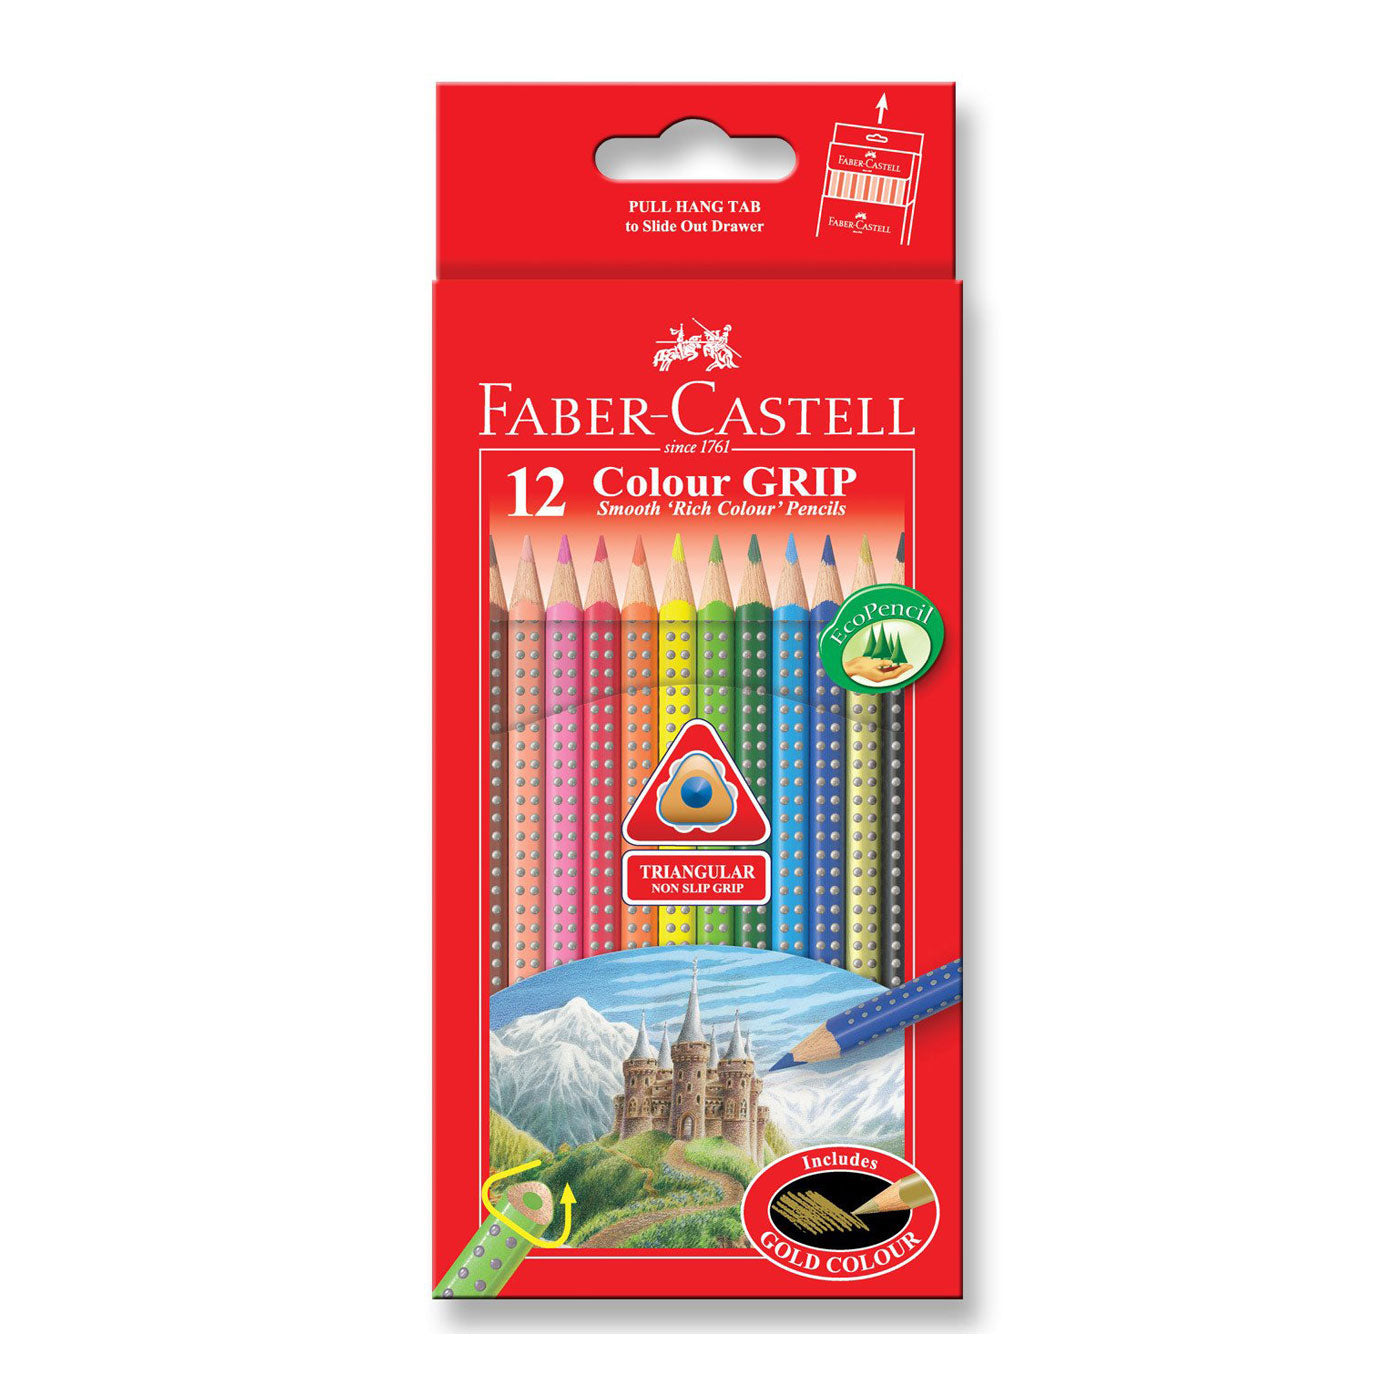 Faber-Castell GRIP Colour Pencils Full Length 12 Pack